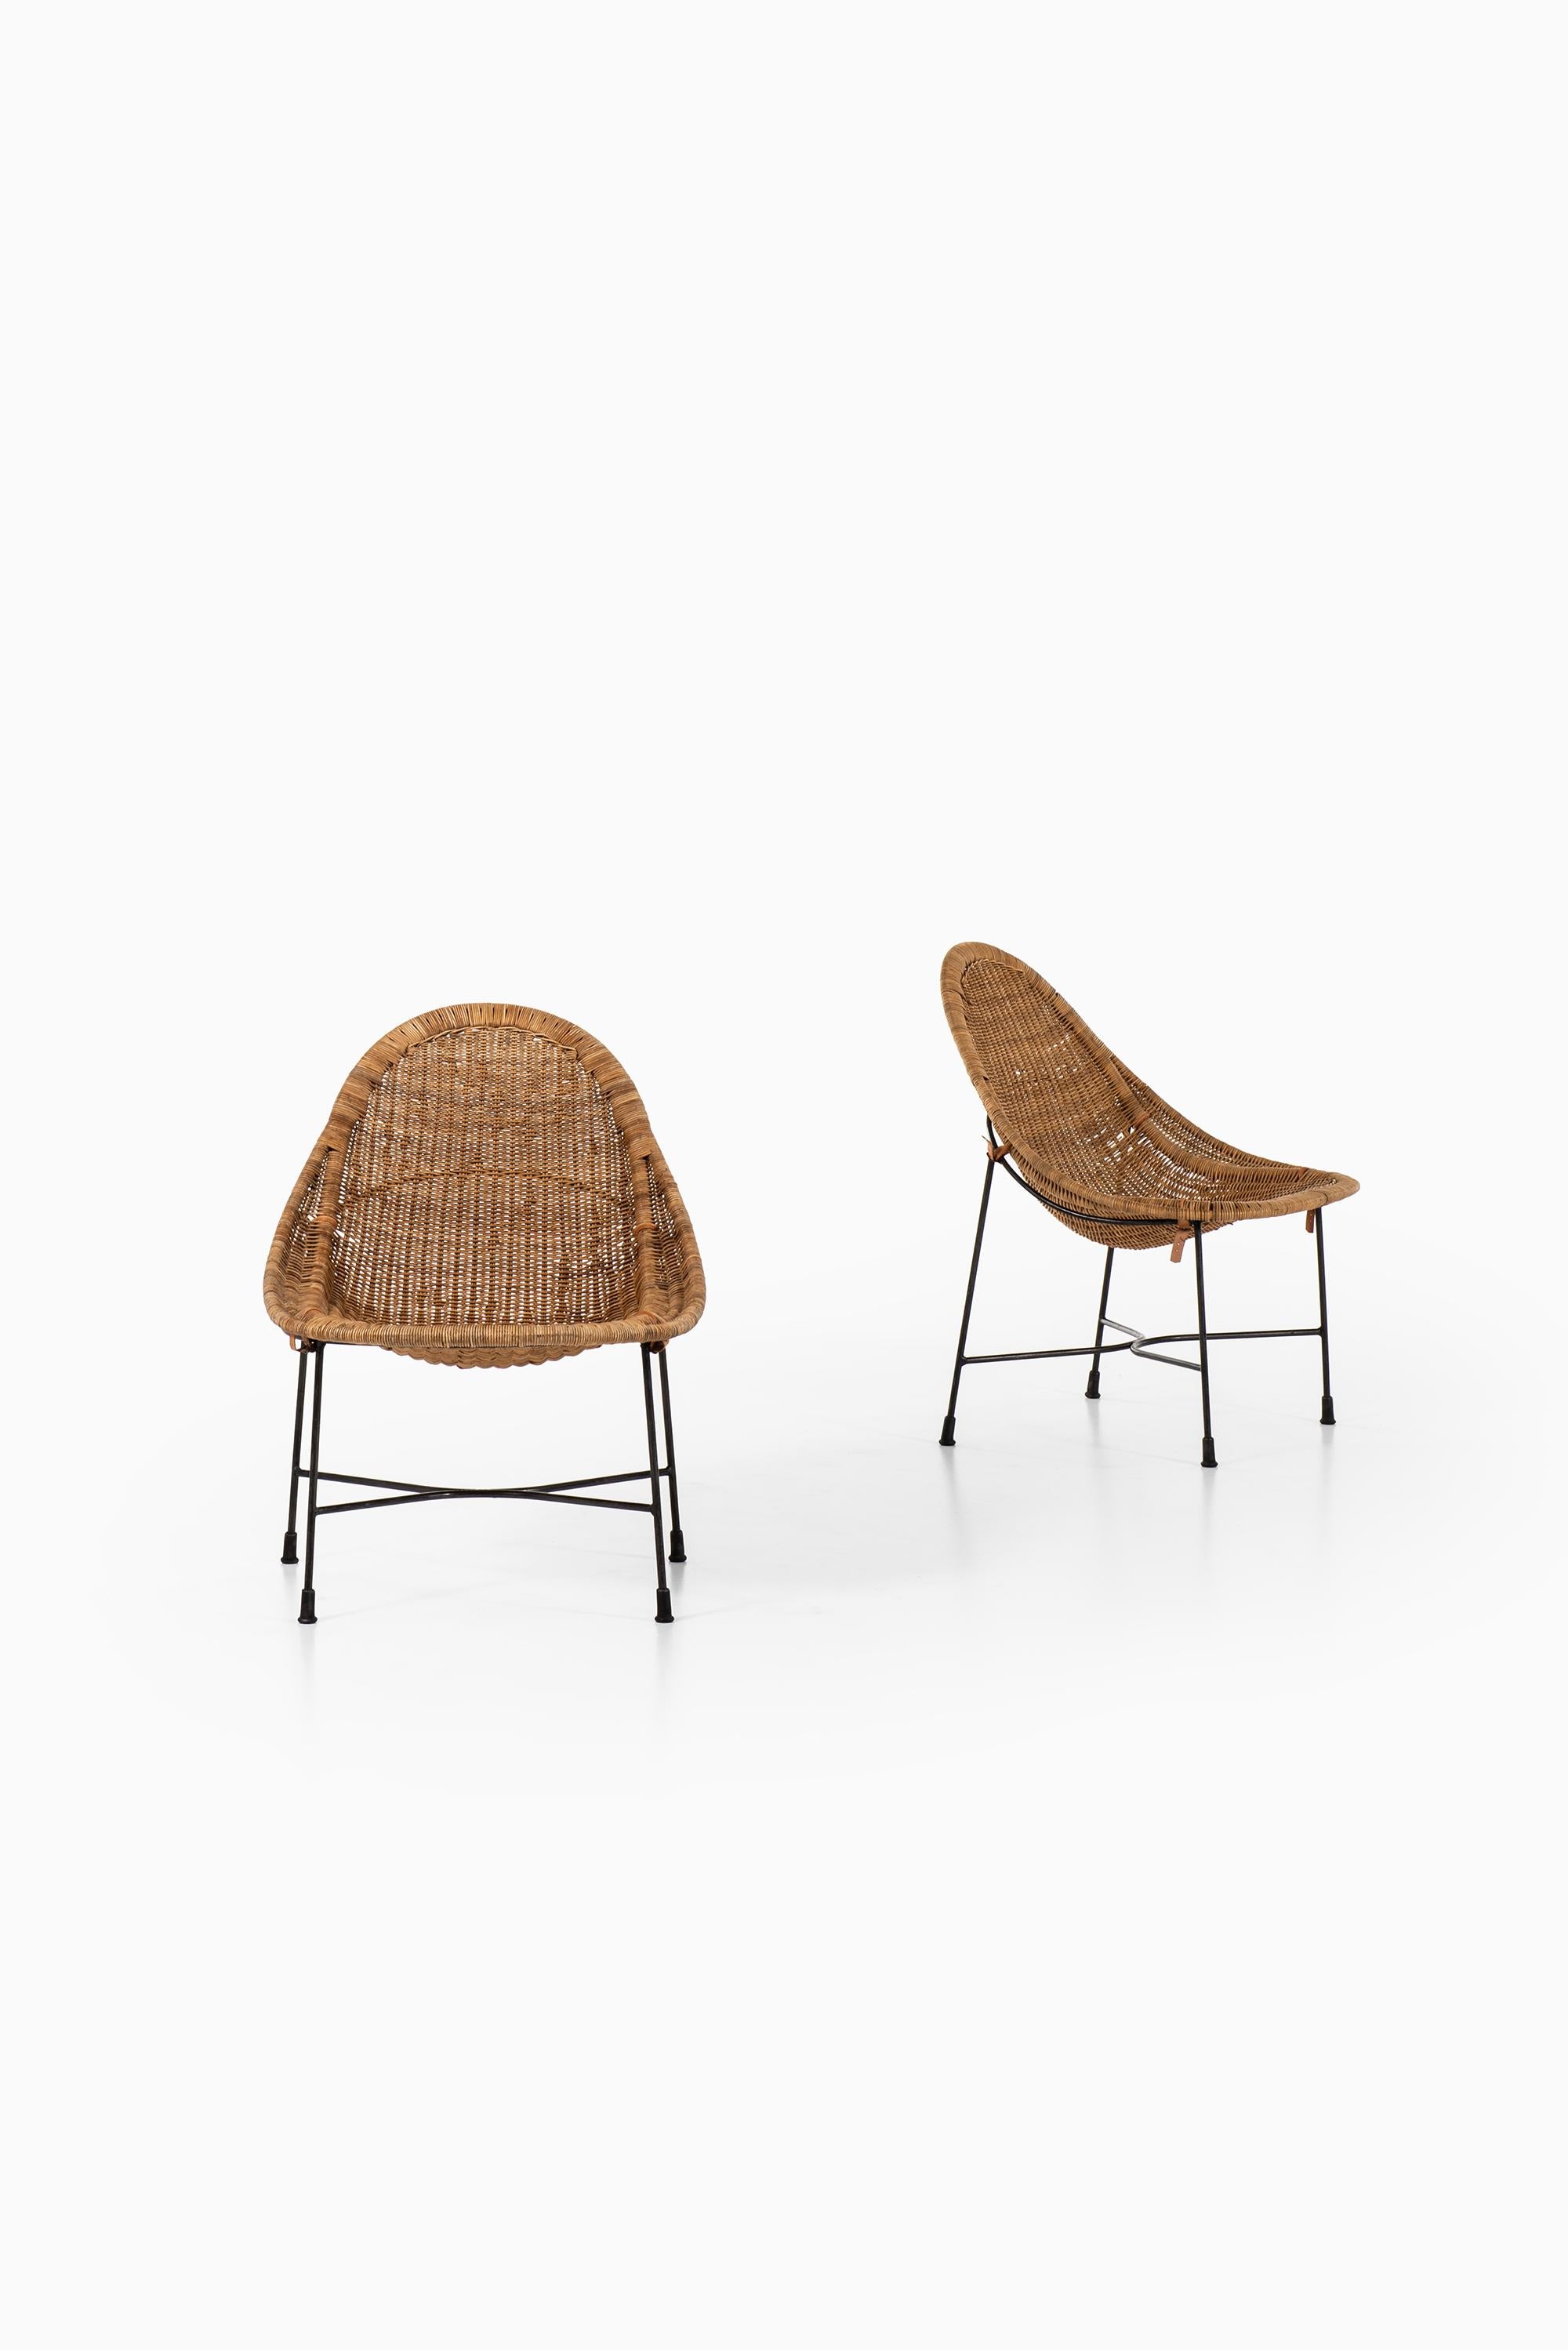 Rare pair of easy chairs model Lilla Kraal designed by Kerstin Hörlin-Holmquist. Produced by Nordiska Kompaniet (NK) in Sweden.